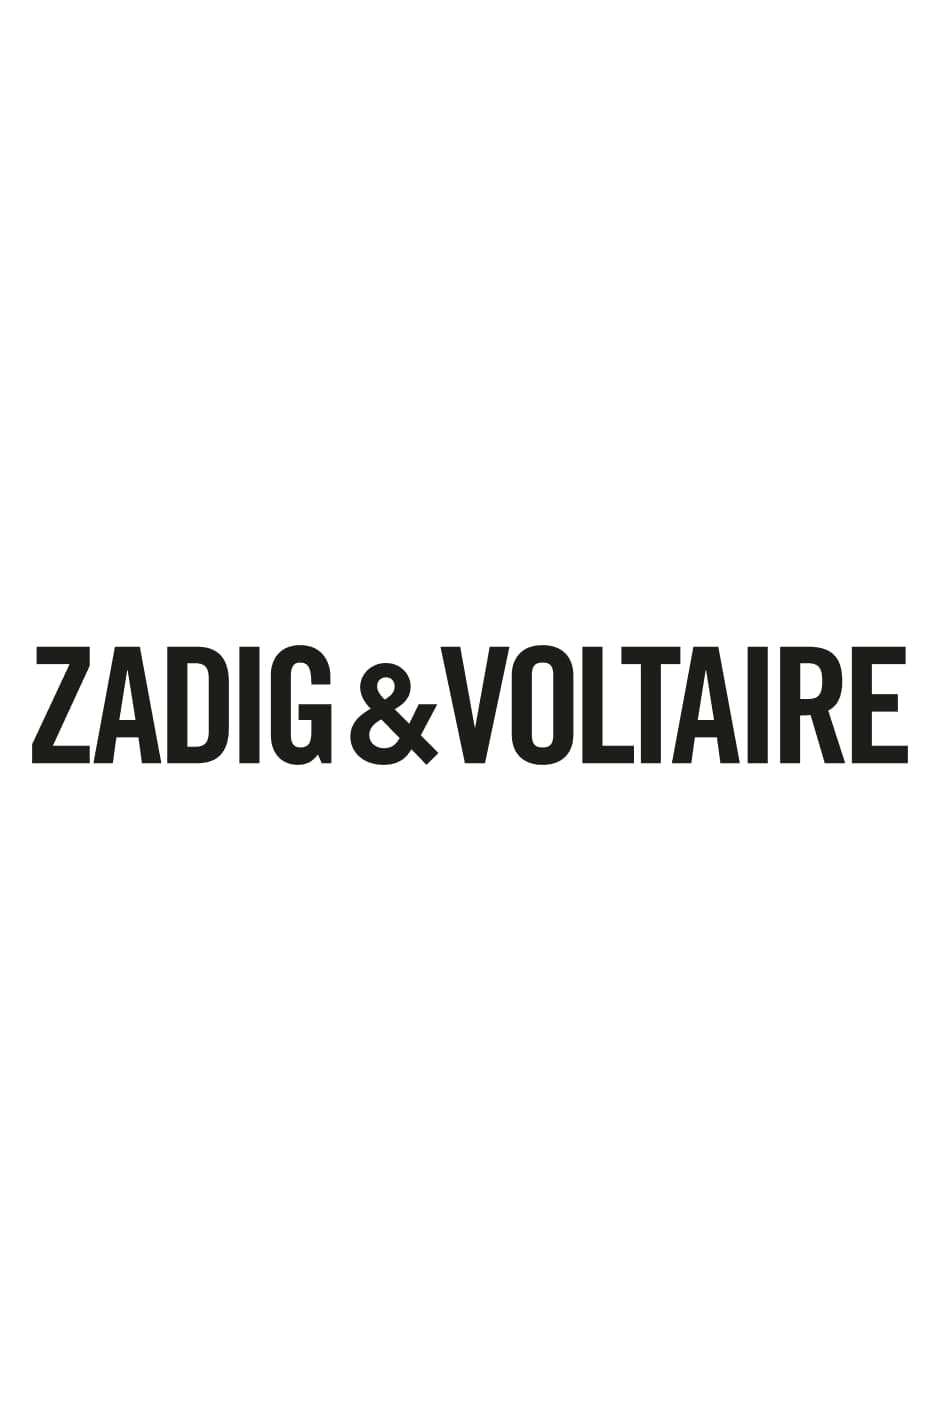 Zadig & Voltaire Femme Accessoires Sacs & Valises Sacs bowling Sac Sunny Medium Noir Femme 